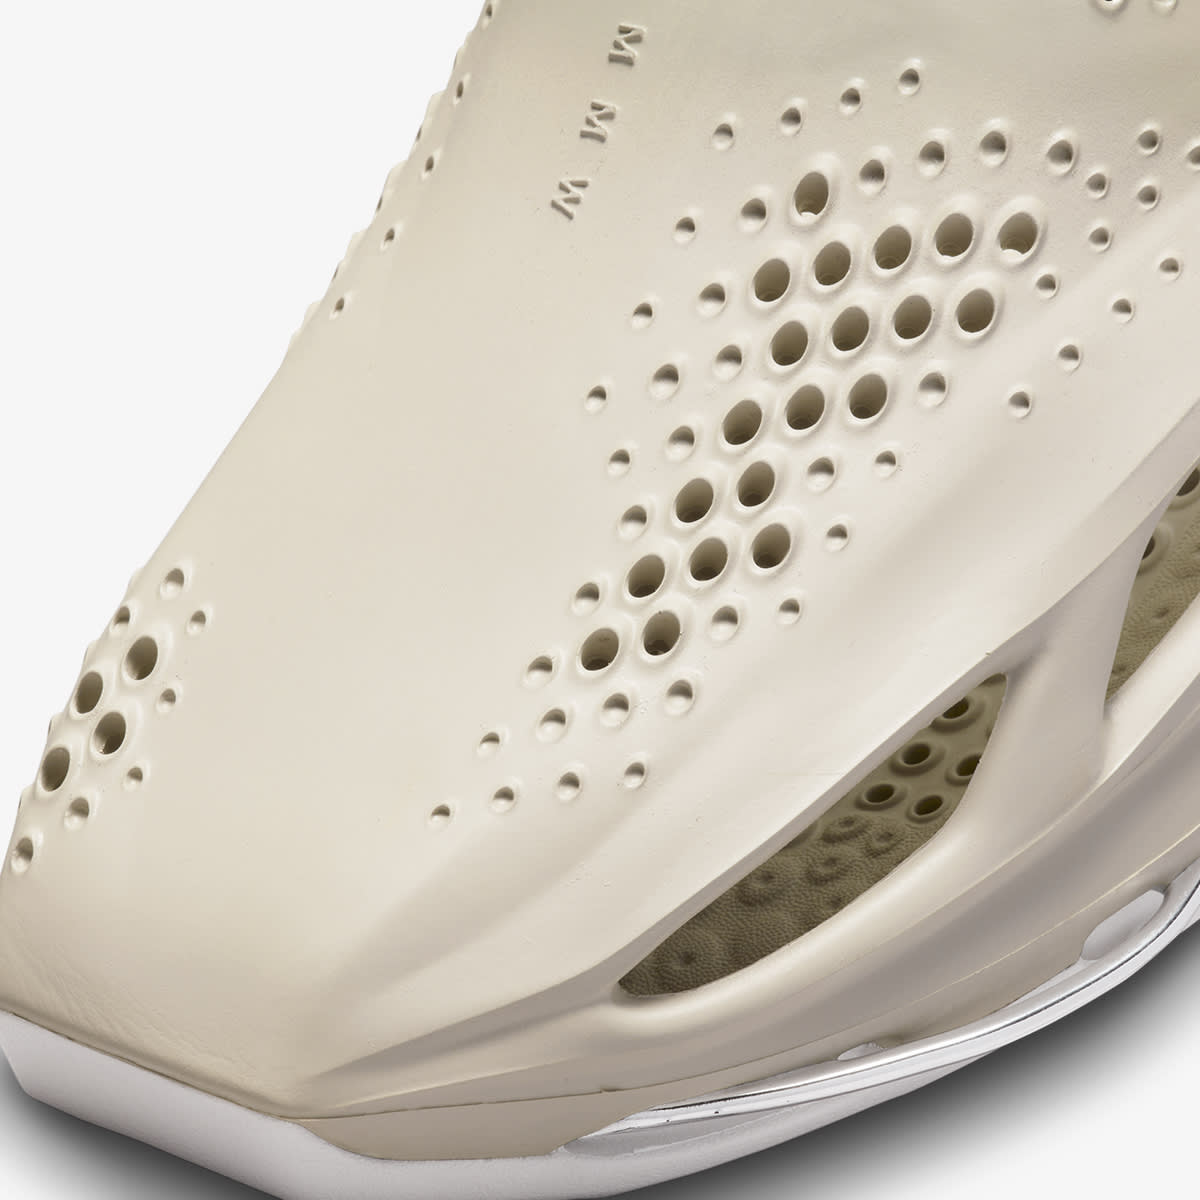 Nike x MMW 5 Slide (Light Bone & Chrome) | END. Launches